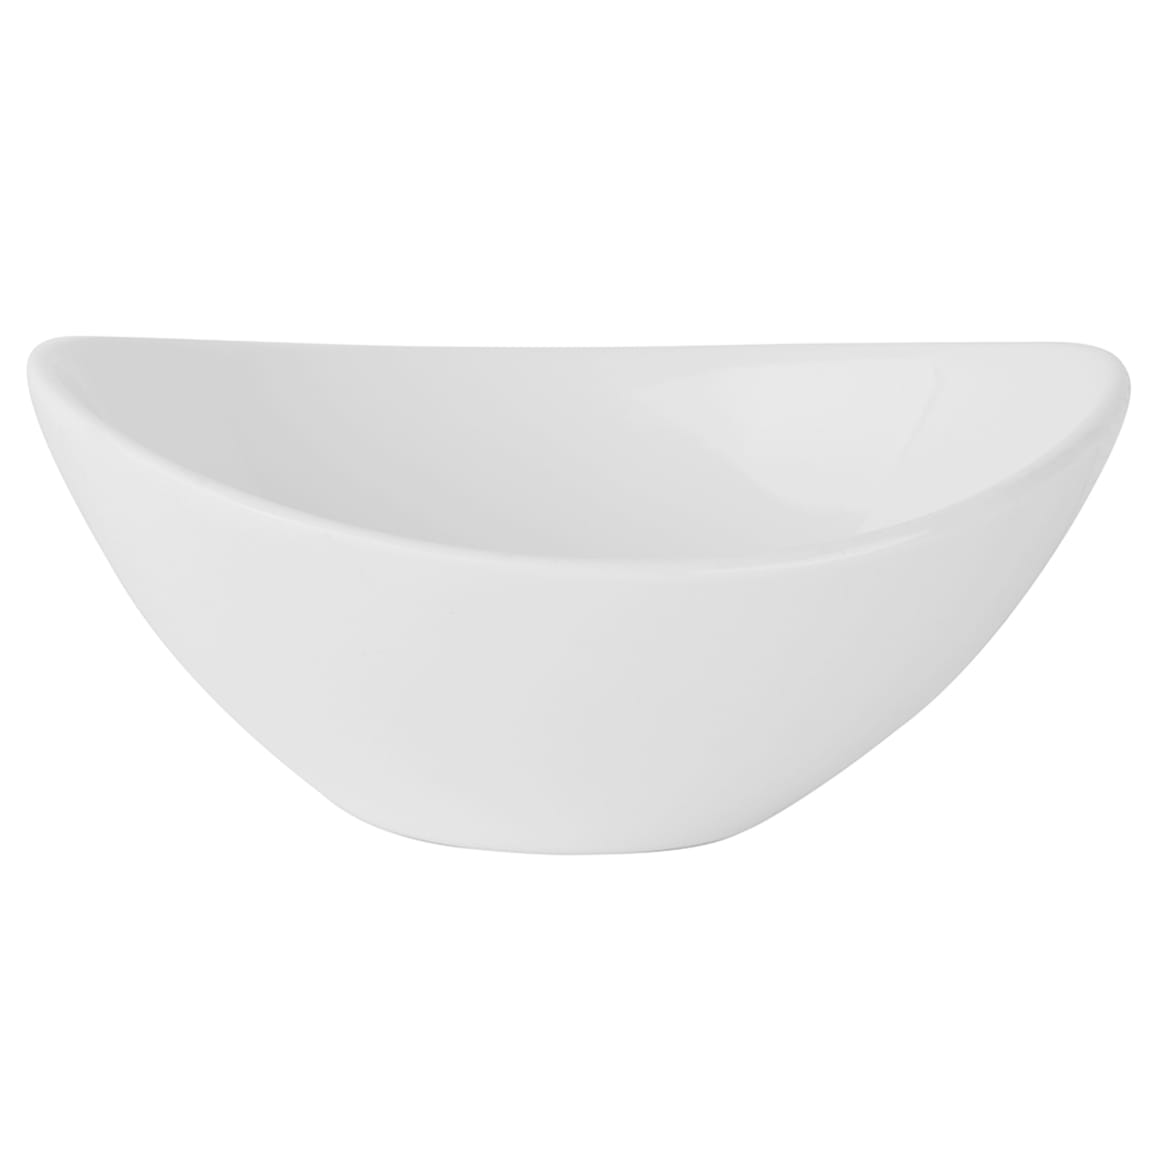 10 Strawberry Street A18762 6 oz Oval Boat Bowl - Porcelain, White